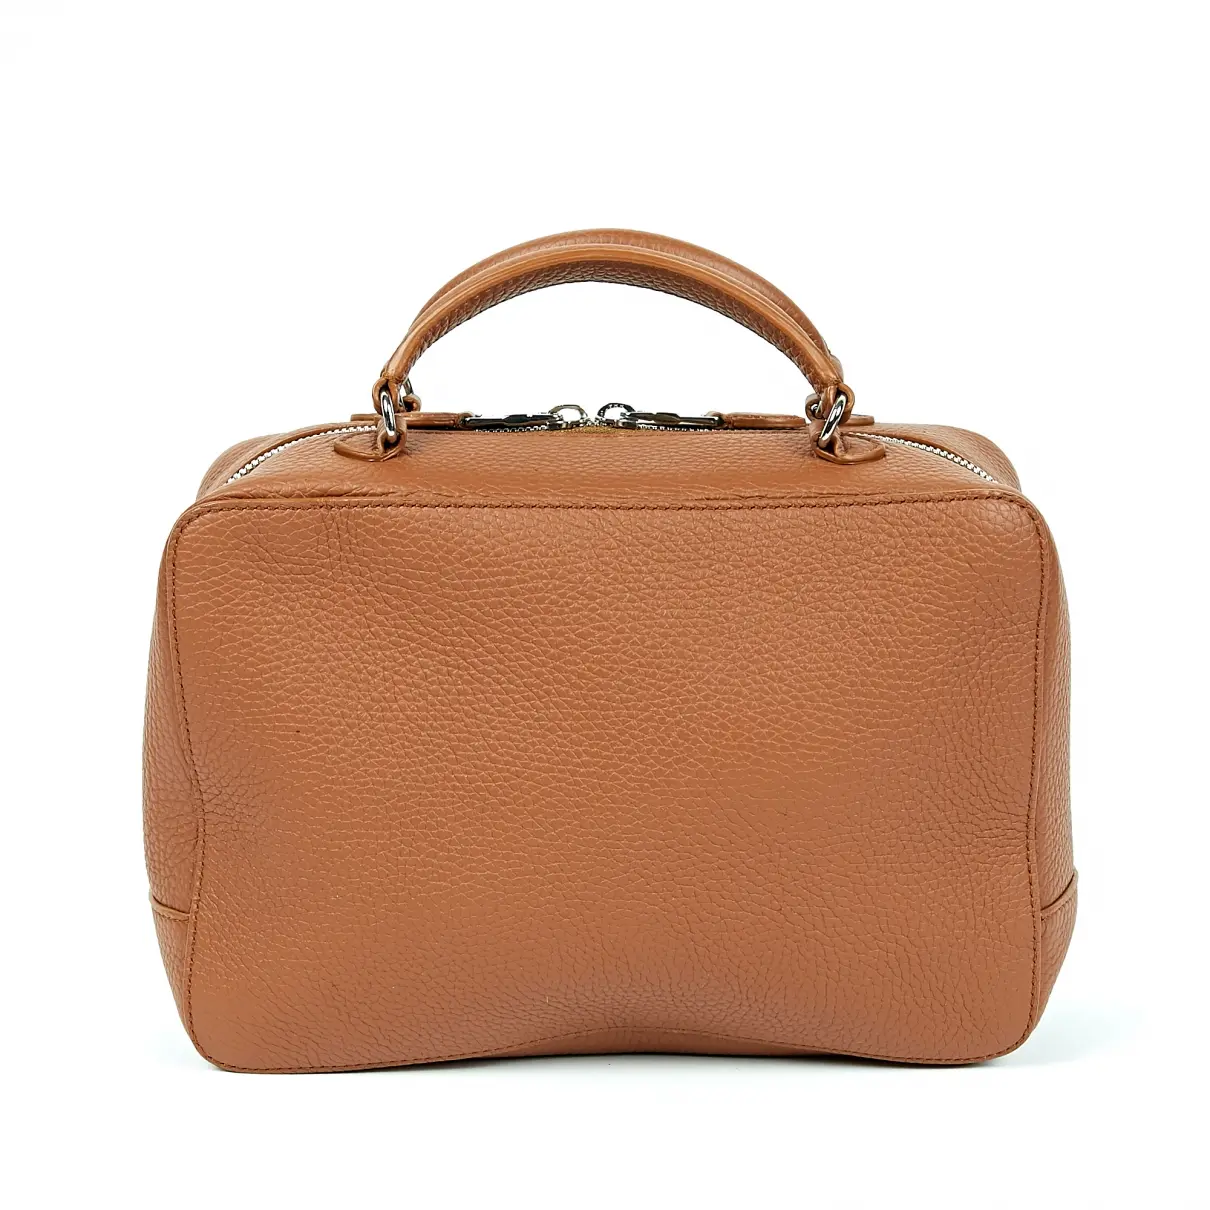 Buy Sonia Rykiel Pavé leather handbag online